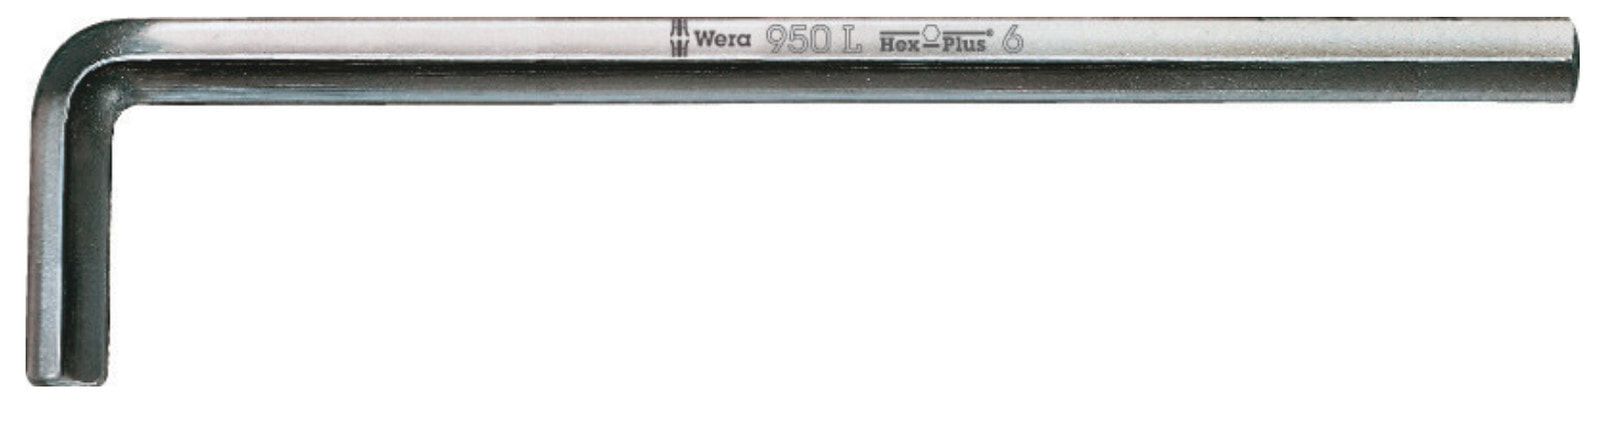 Шестигранный и шлицевый ключ Wera 05021645001, L-shaped hex key, Metric, 12 mm, Chrome, 25 cm, 4.5 cm